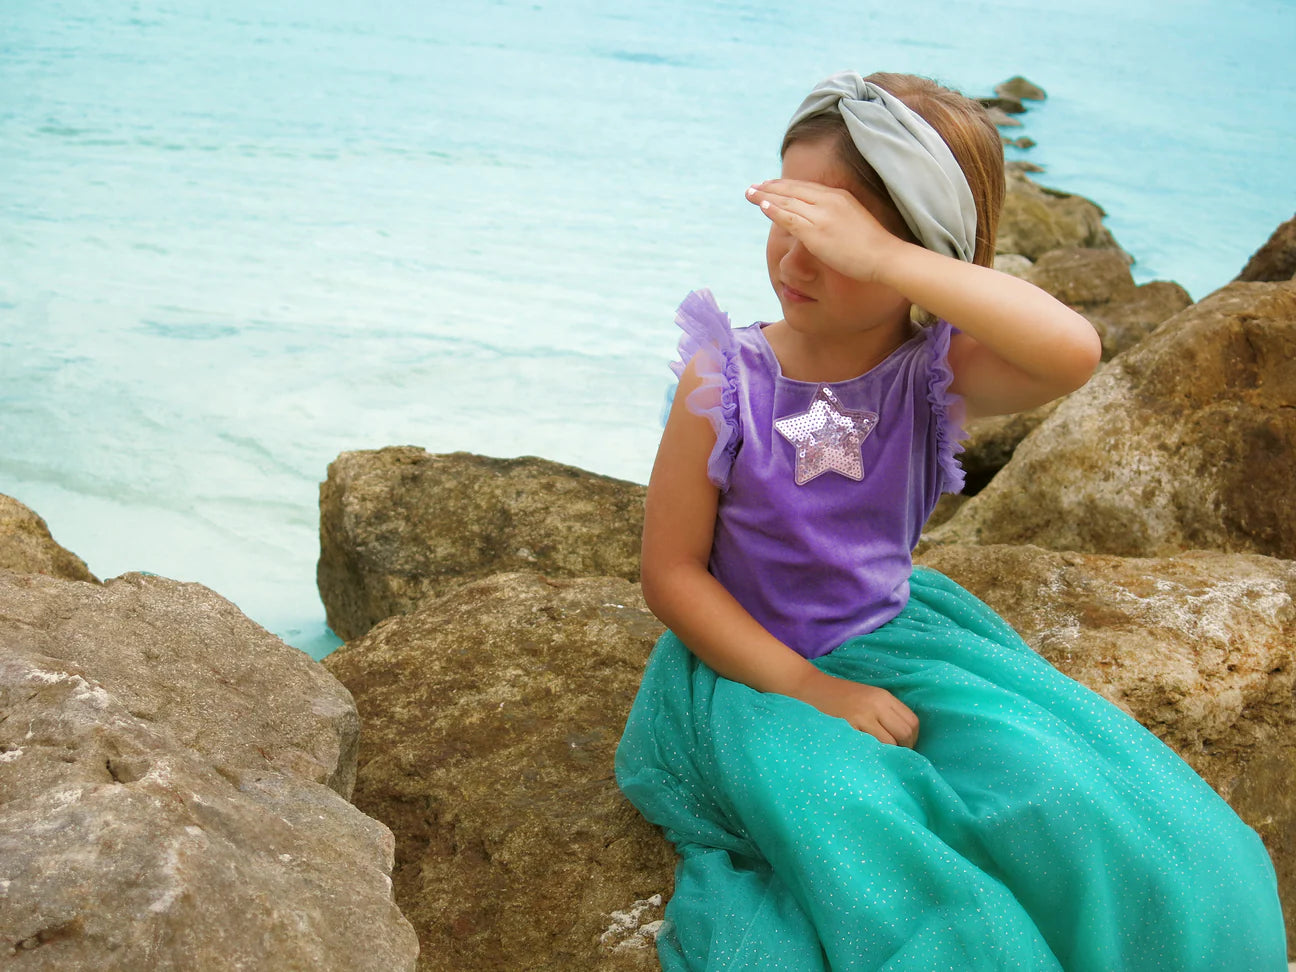 Joy by Teresita Orillac: The Mermaid Princess Costume Dress